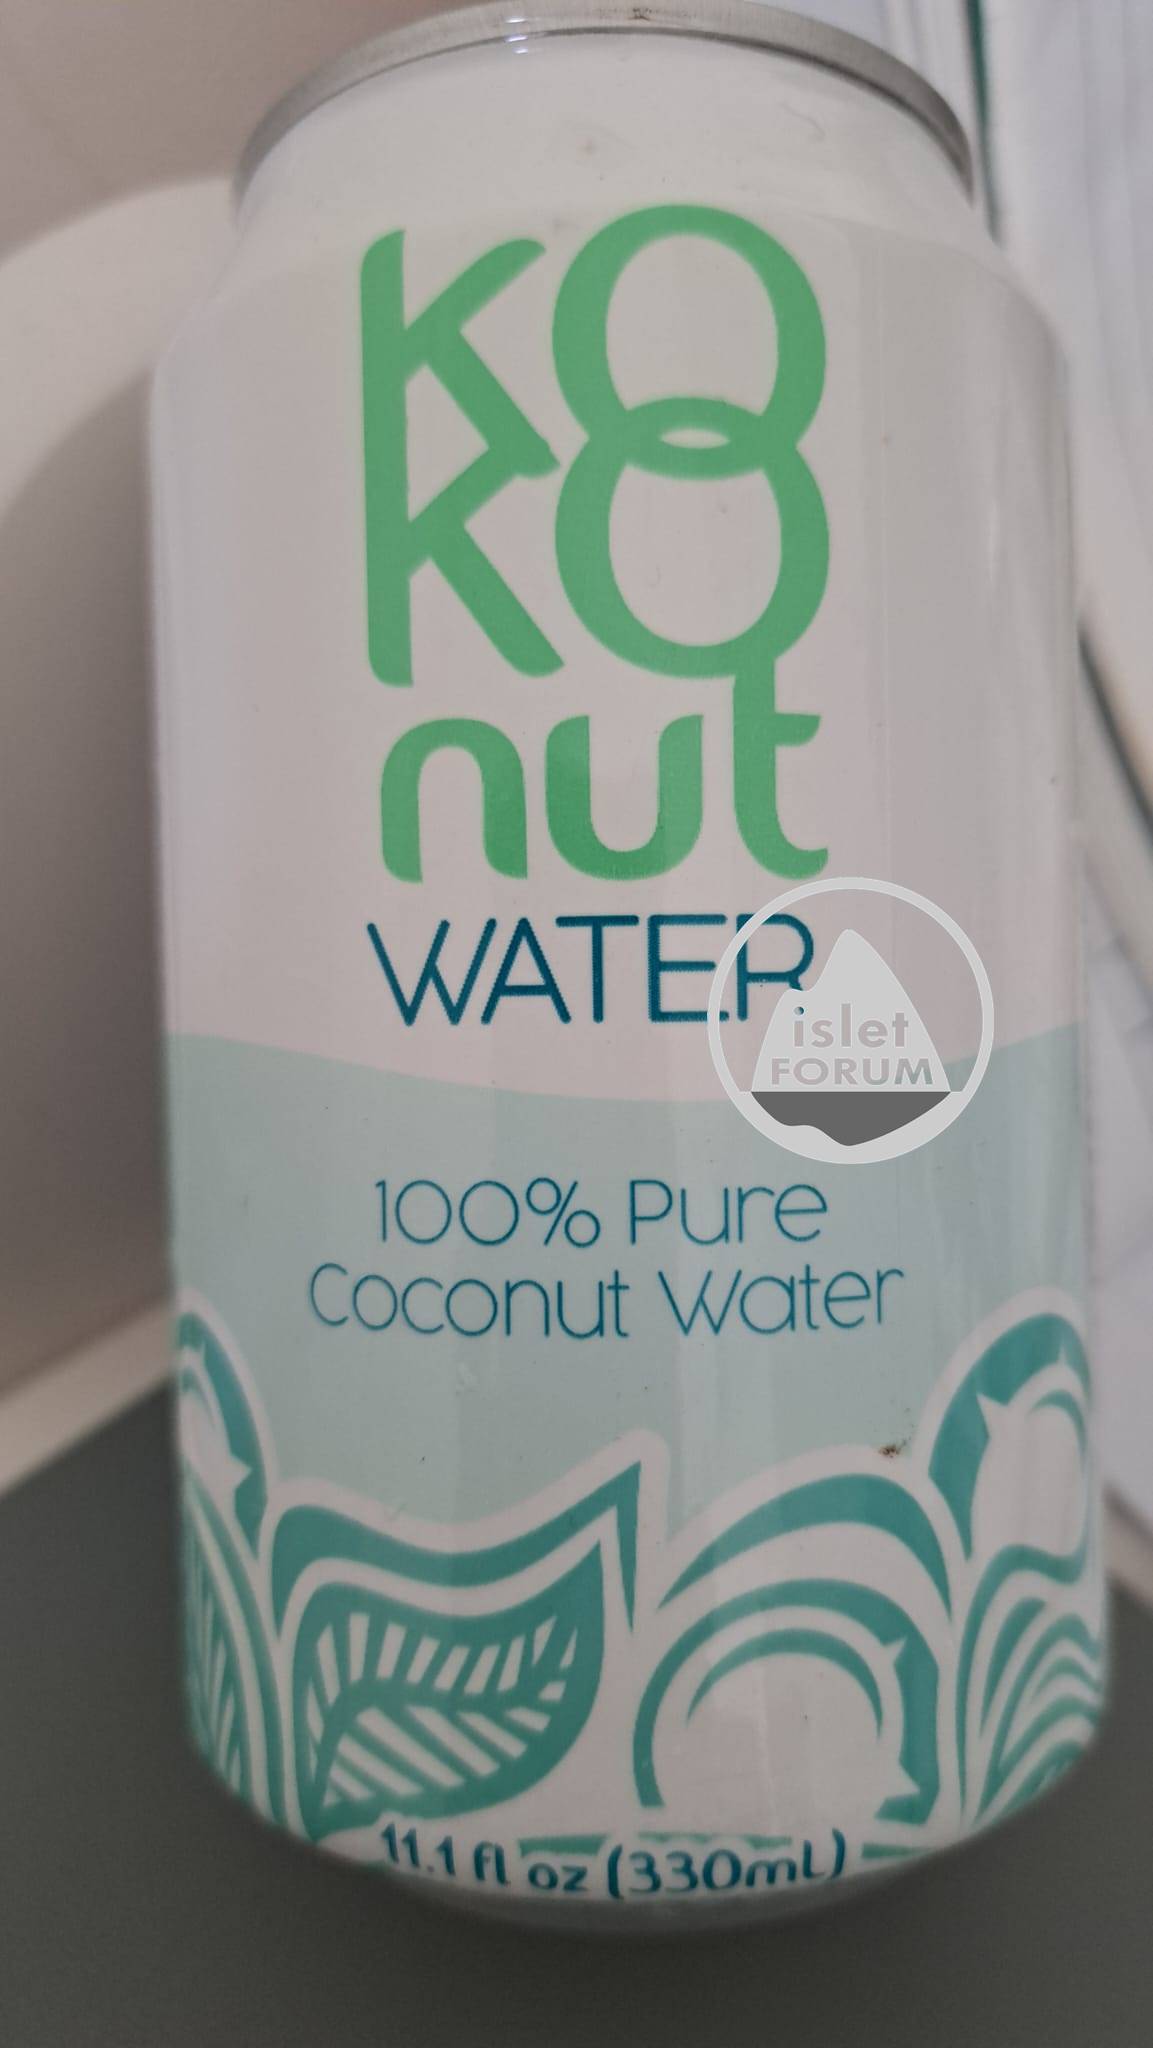 Kokonut Water 100% Pure Coconut Water 330ml (2).jpeg